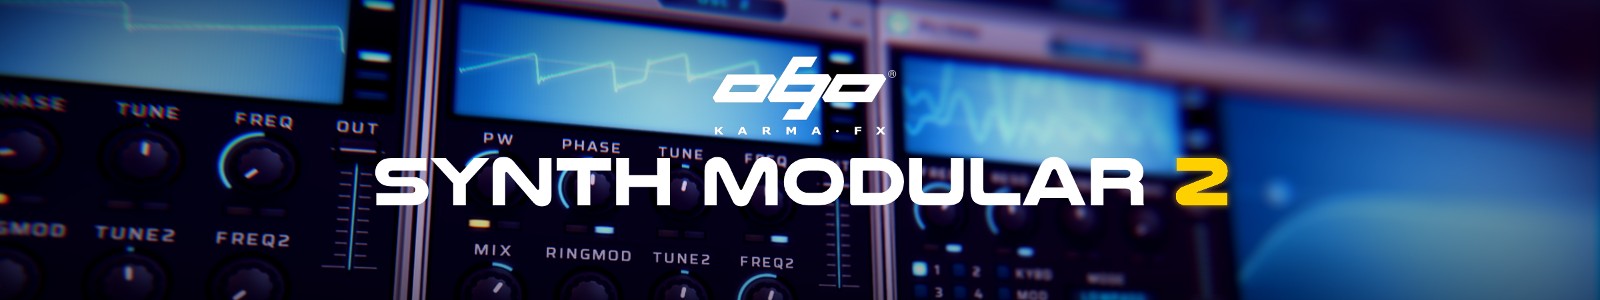 Synth Modular 2 by KarmaFX